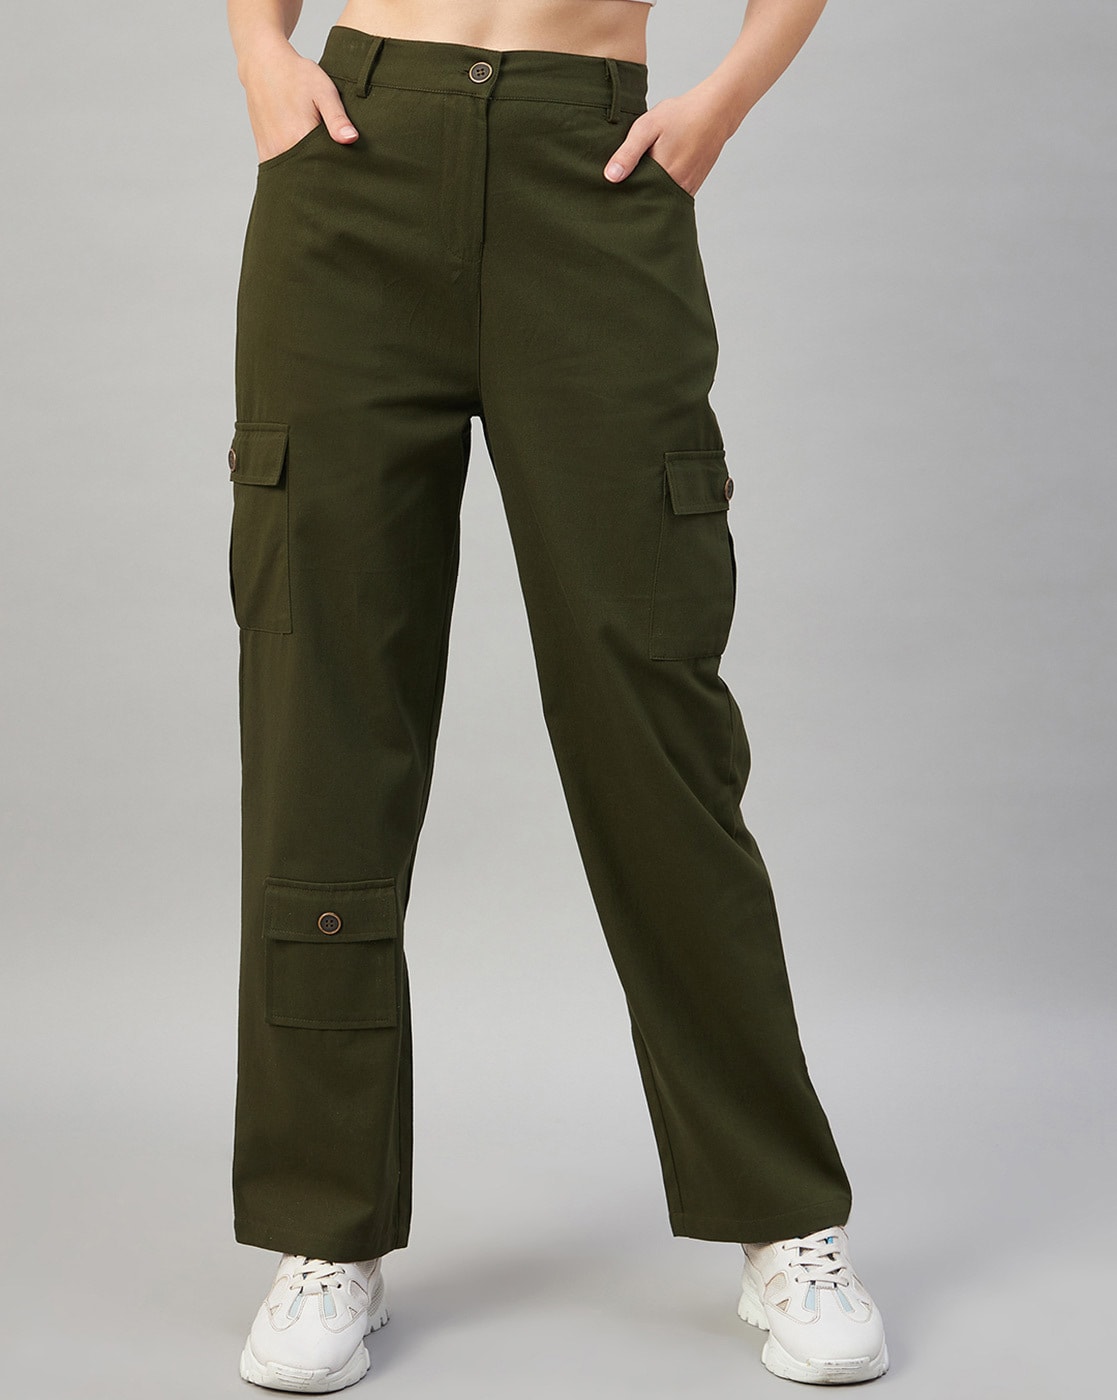 Cargo Pants For Women's: Trendy Baggy & Cotton Pants - Nolabels.in